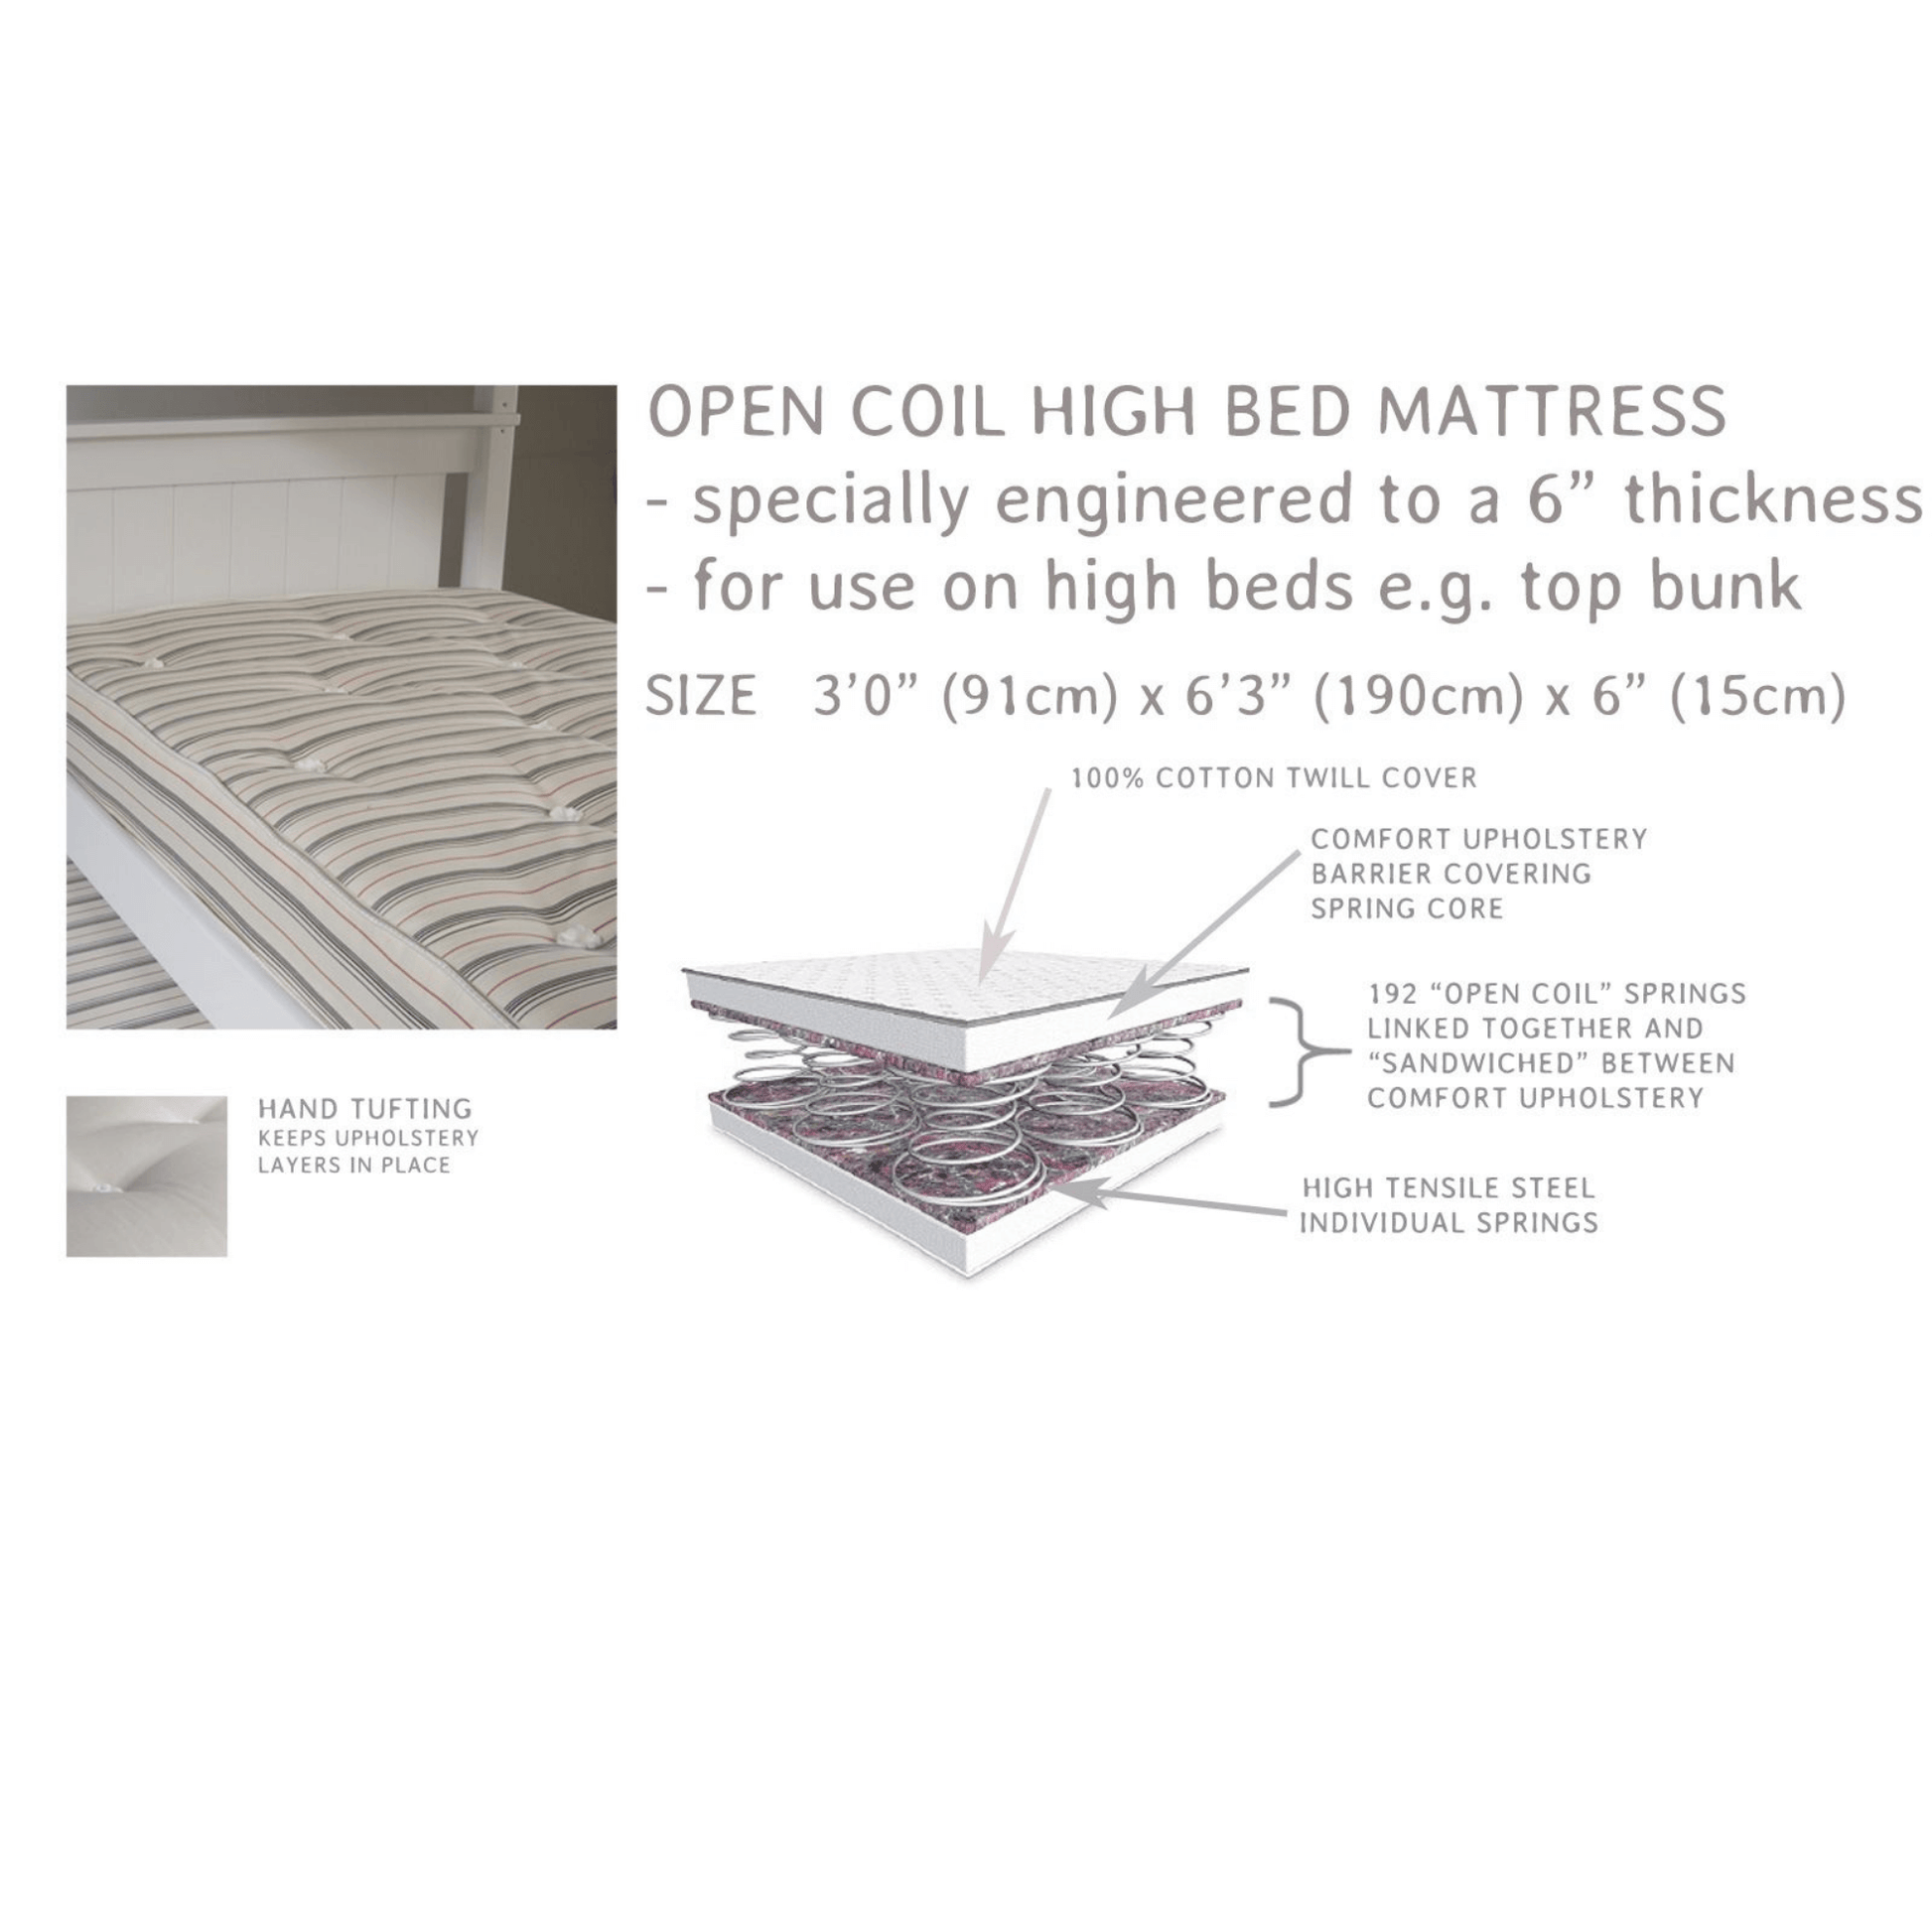 High Bed Cotton Open Coil Single Mattress details